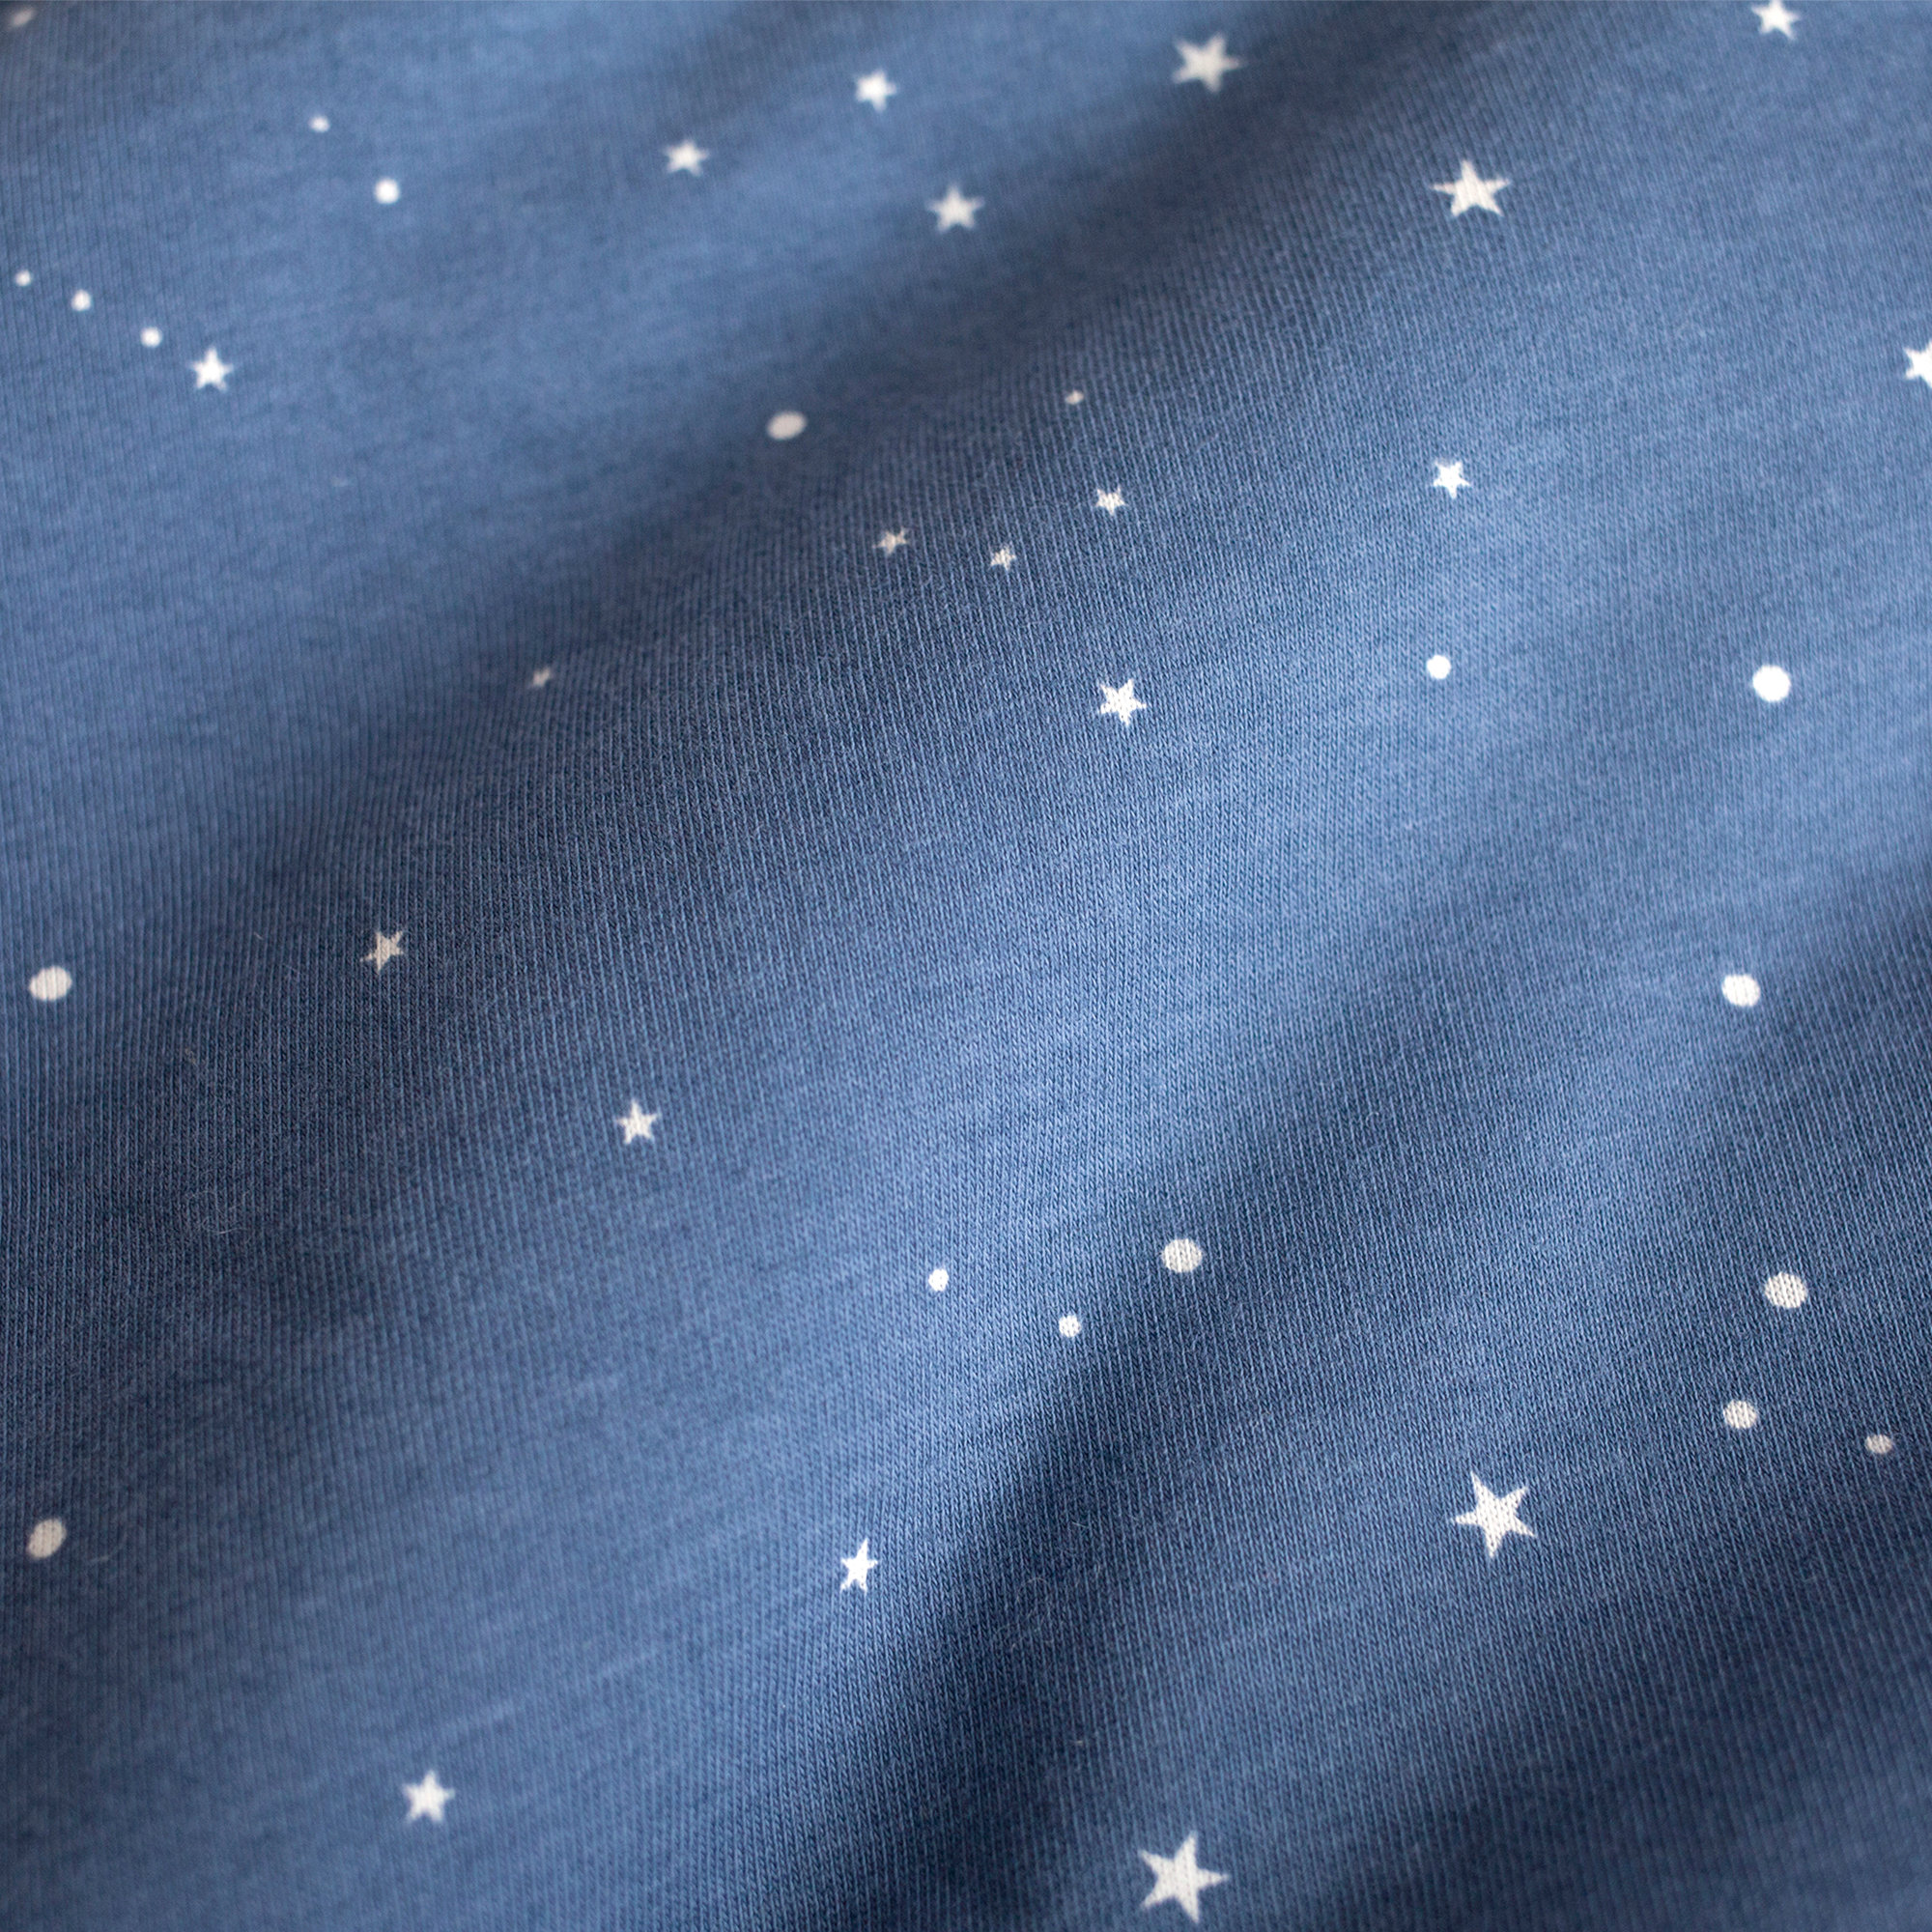 Nestchen Laufgitter Pady jersey + jersey 75x95x28cm STARY Little stars print shade